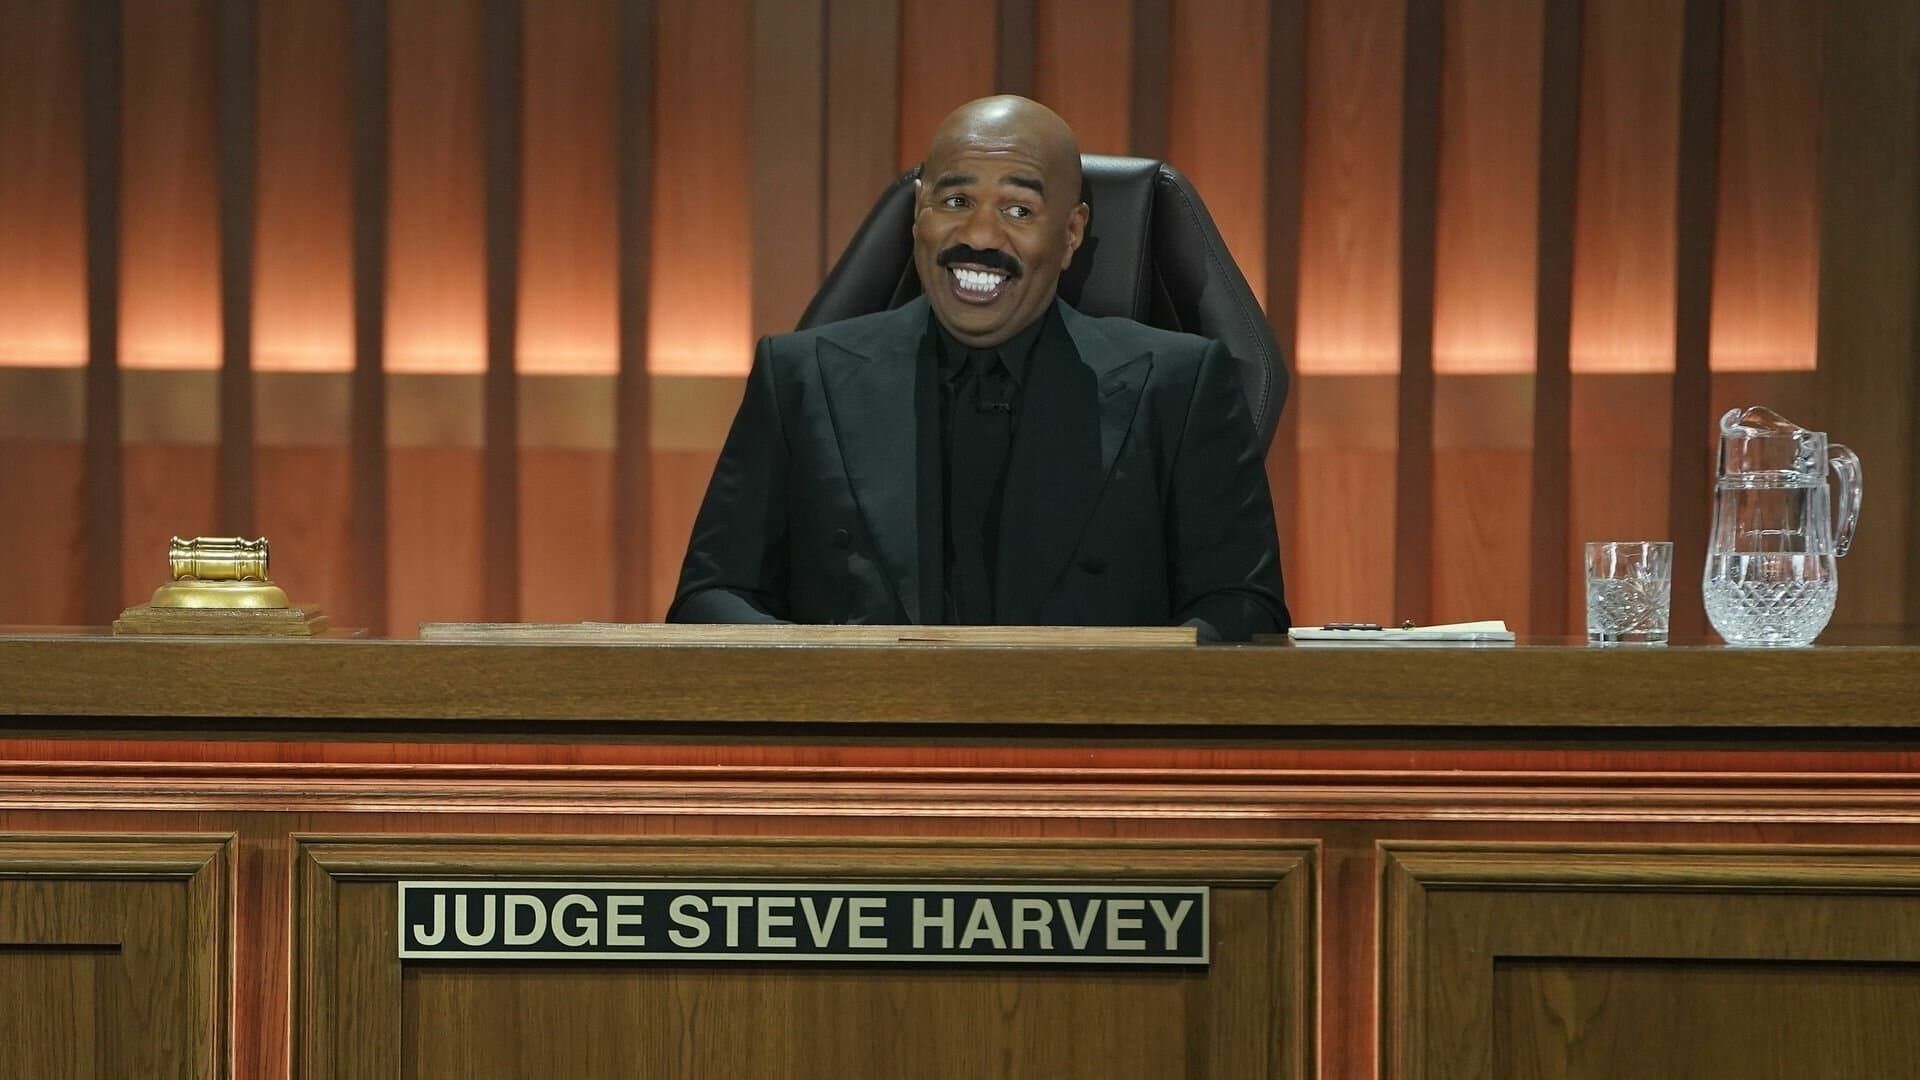 Judge Steve Harvey background